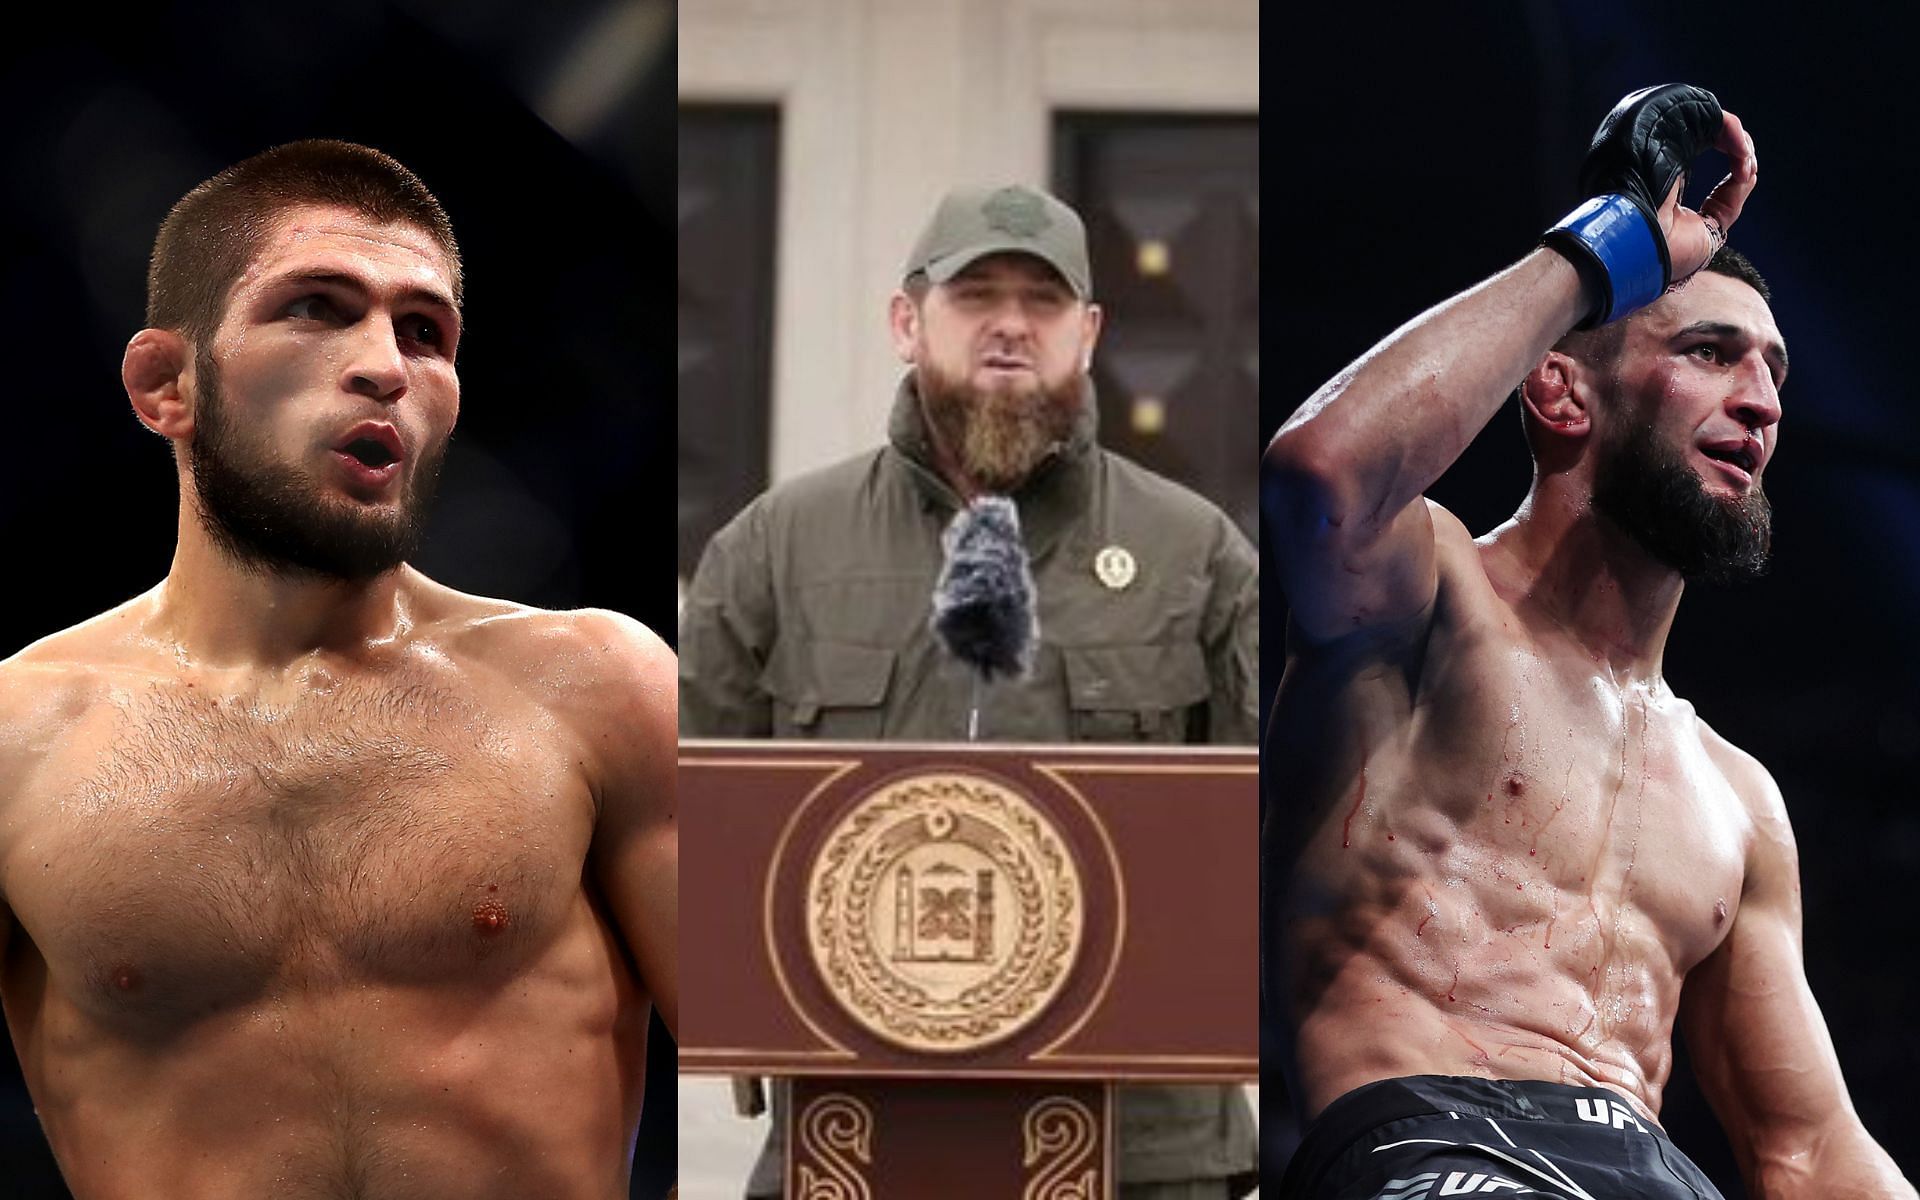 Khabib Nurmagomedov (left), Ramzan Kadyrov (center), and Khamzat Chimaev (right) (Image credits Getty Images)